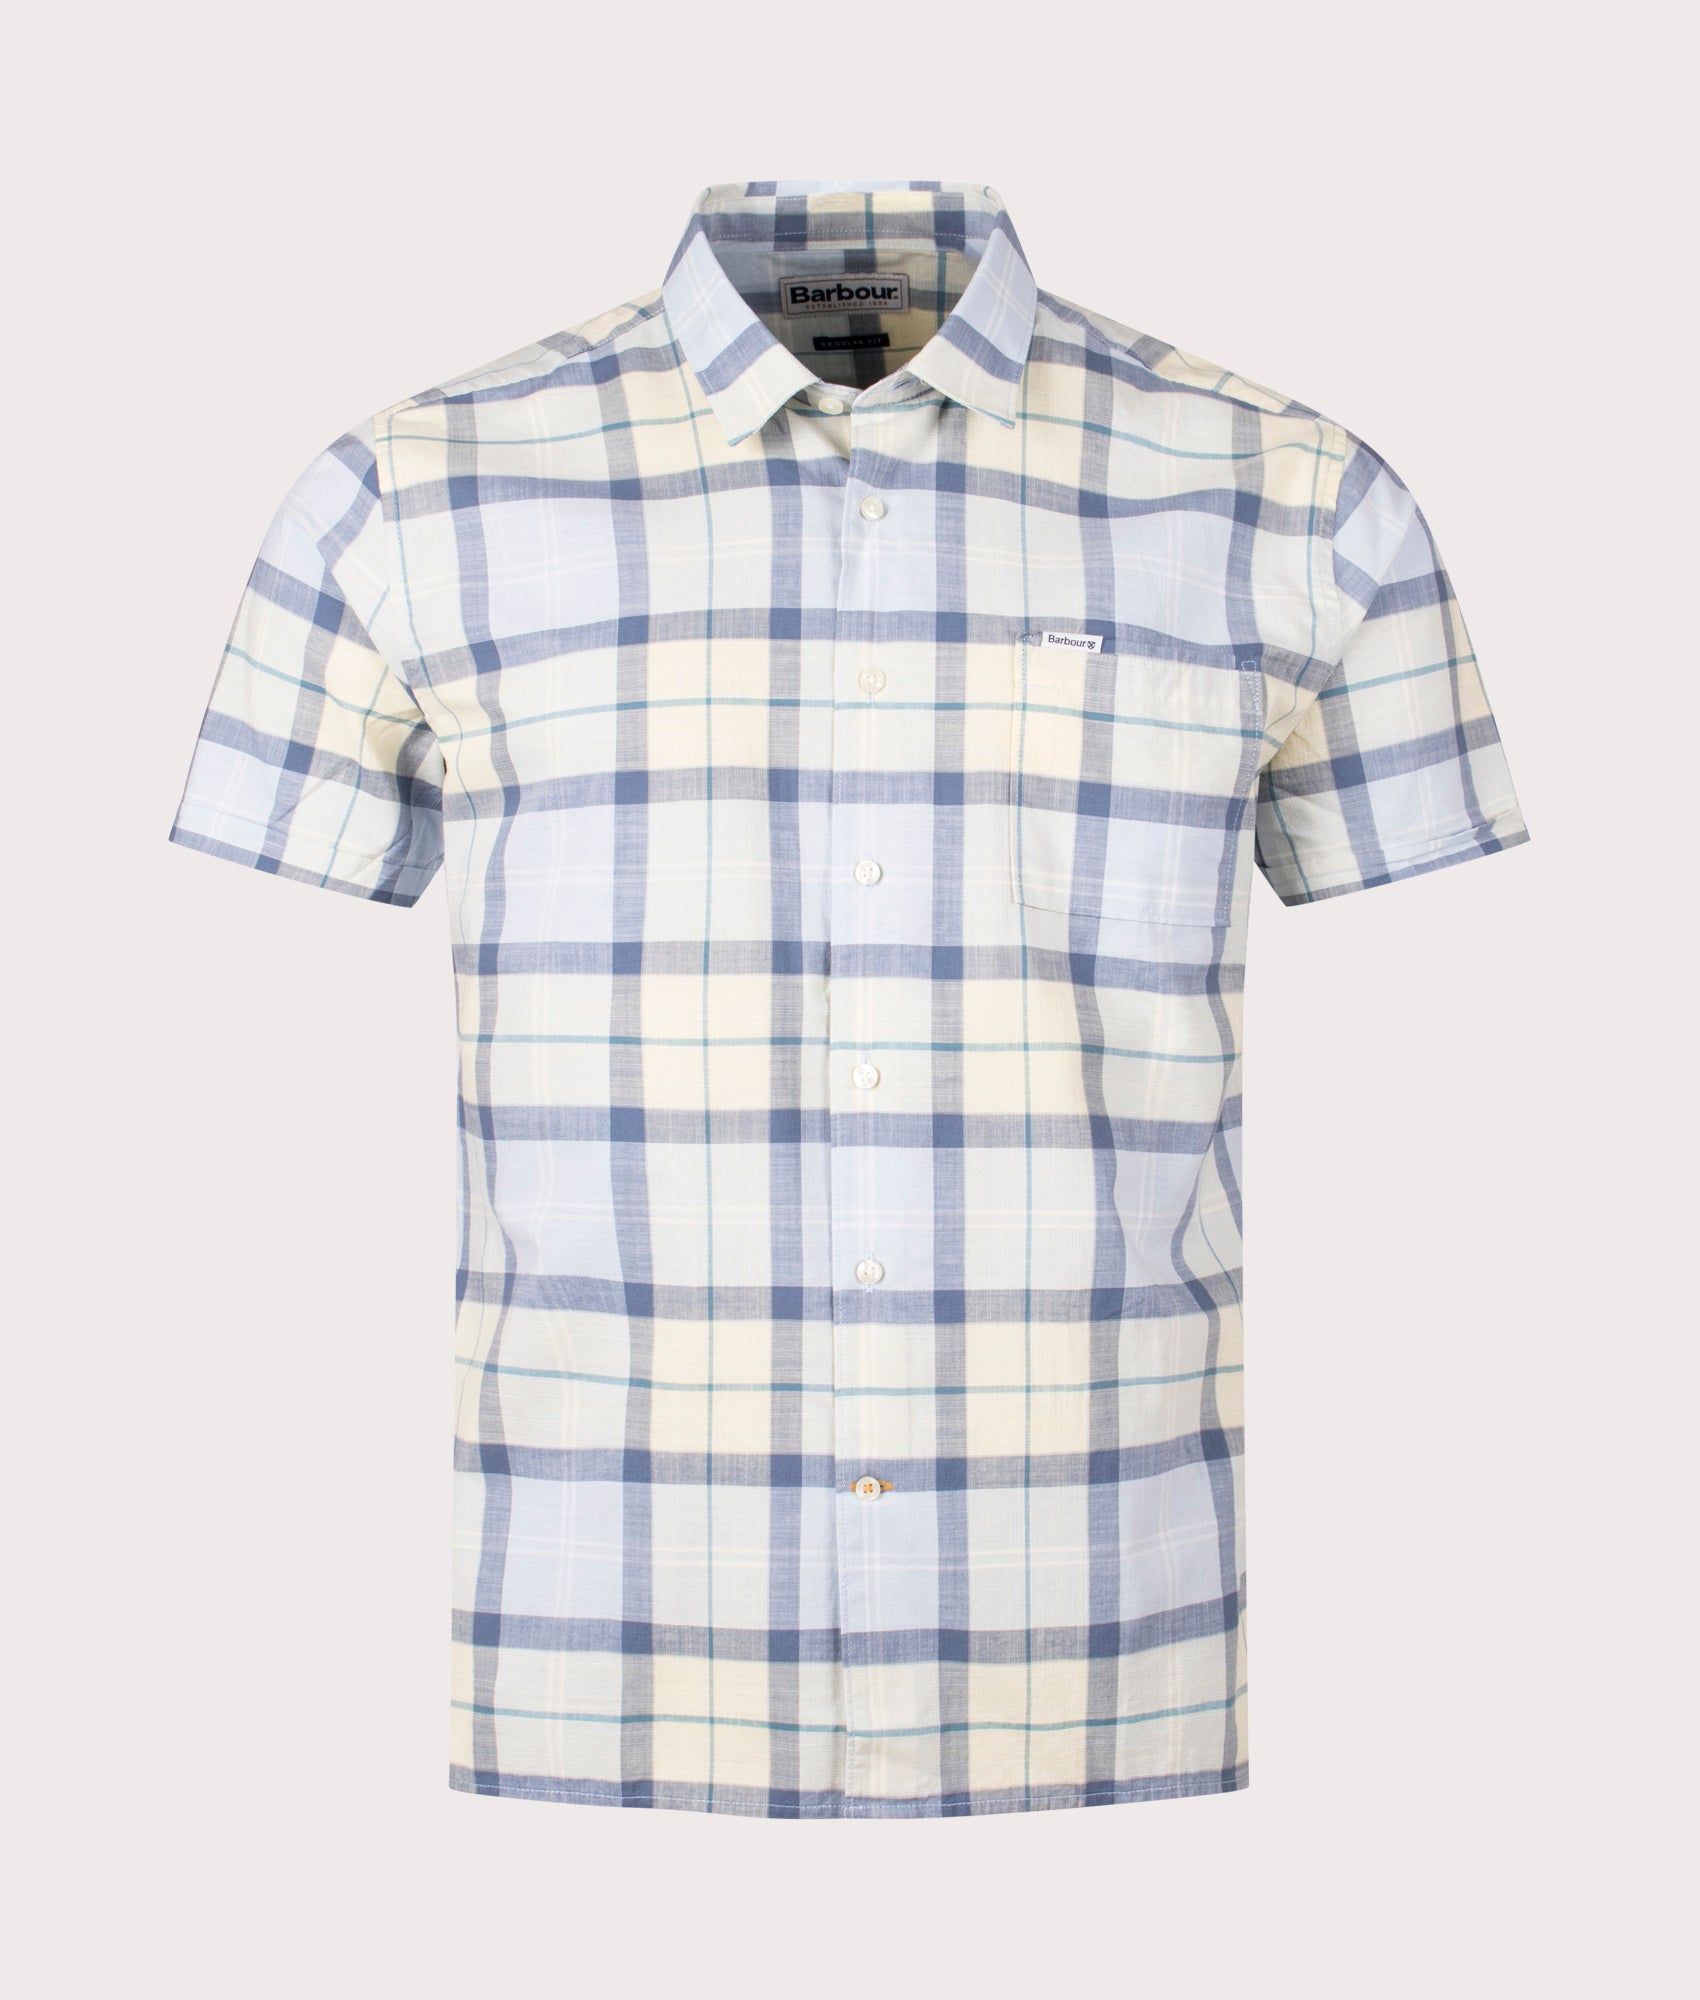 Barbour Lifestyle Mens Short Sleeve Gordon Shirt - Colour: TN25 Sandsend Tartan - Size: Medium